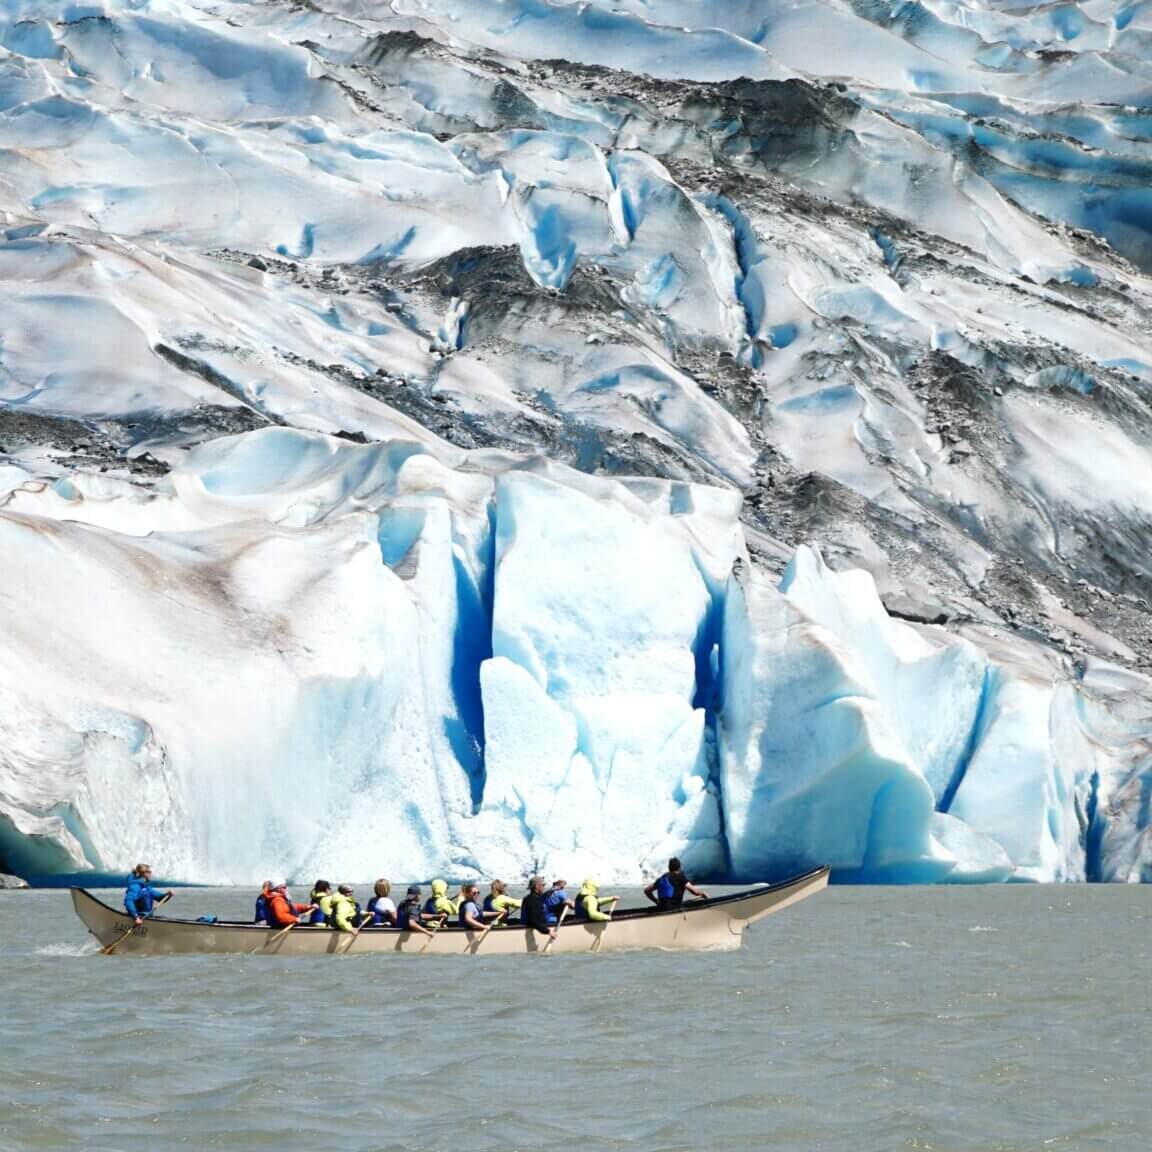 tracy arm glacier cruise